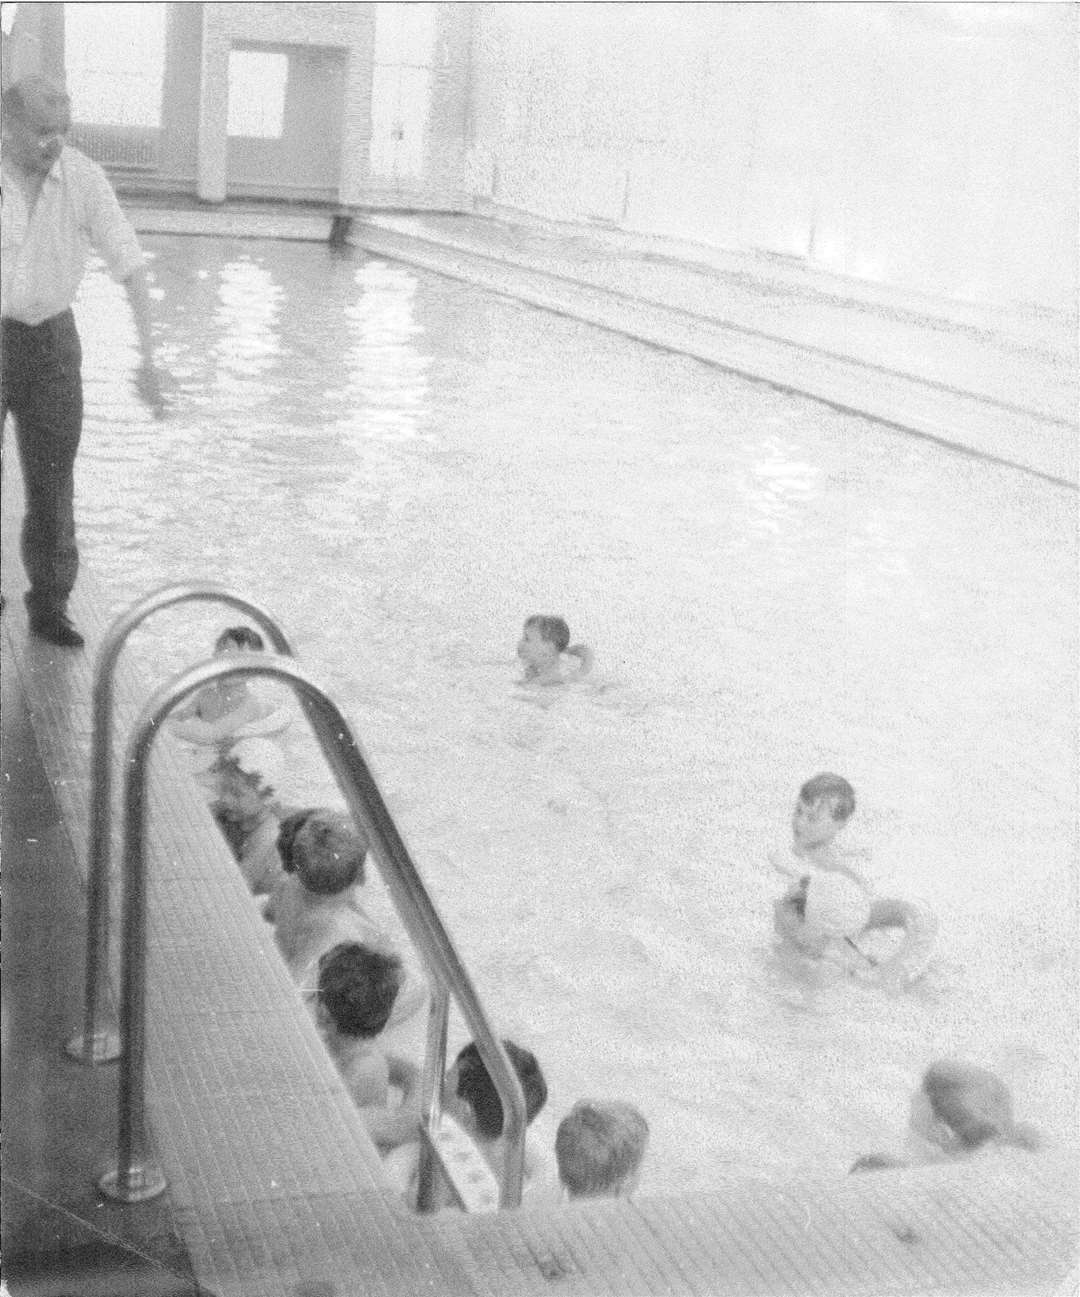 Mr McLaren teaching children to swim in the 1970s